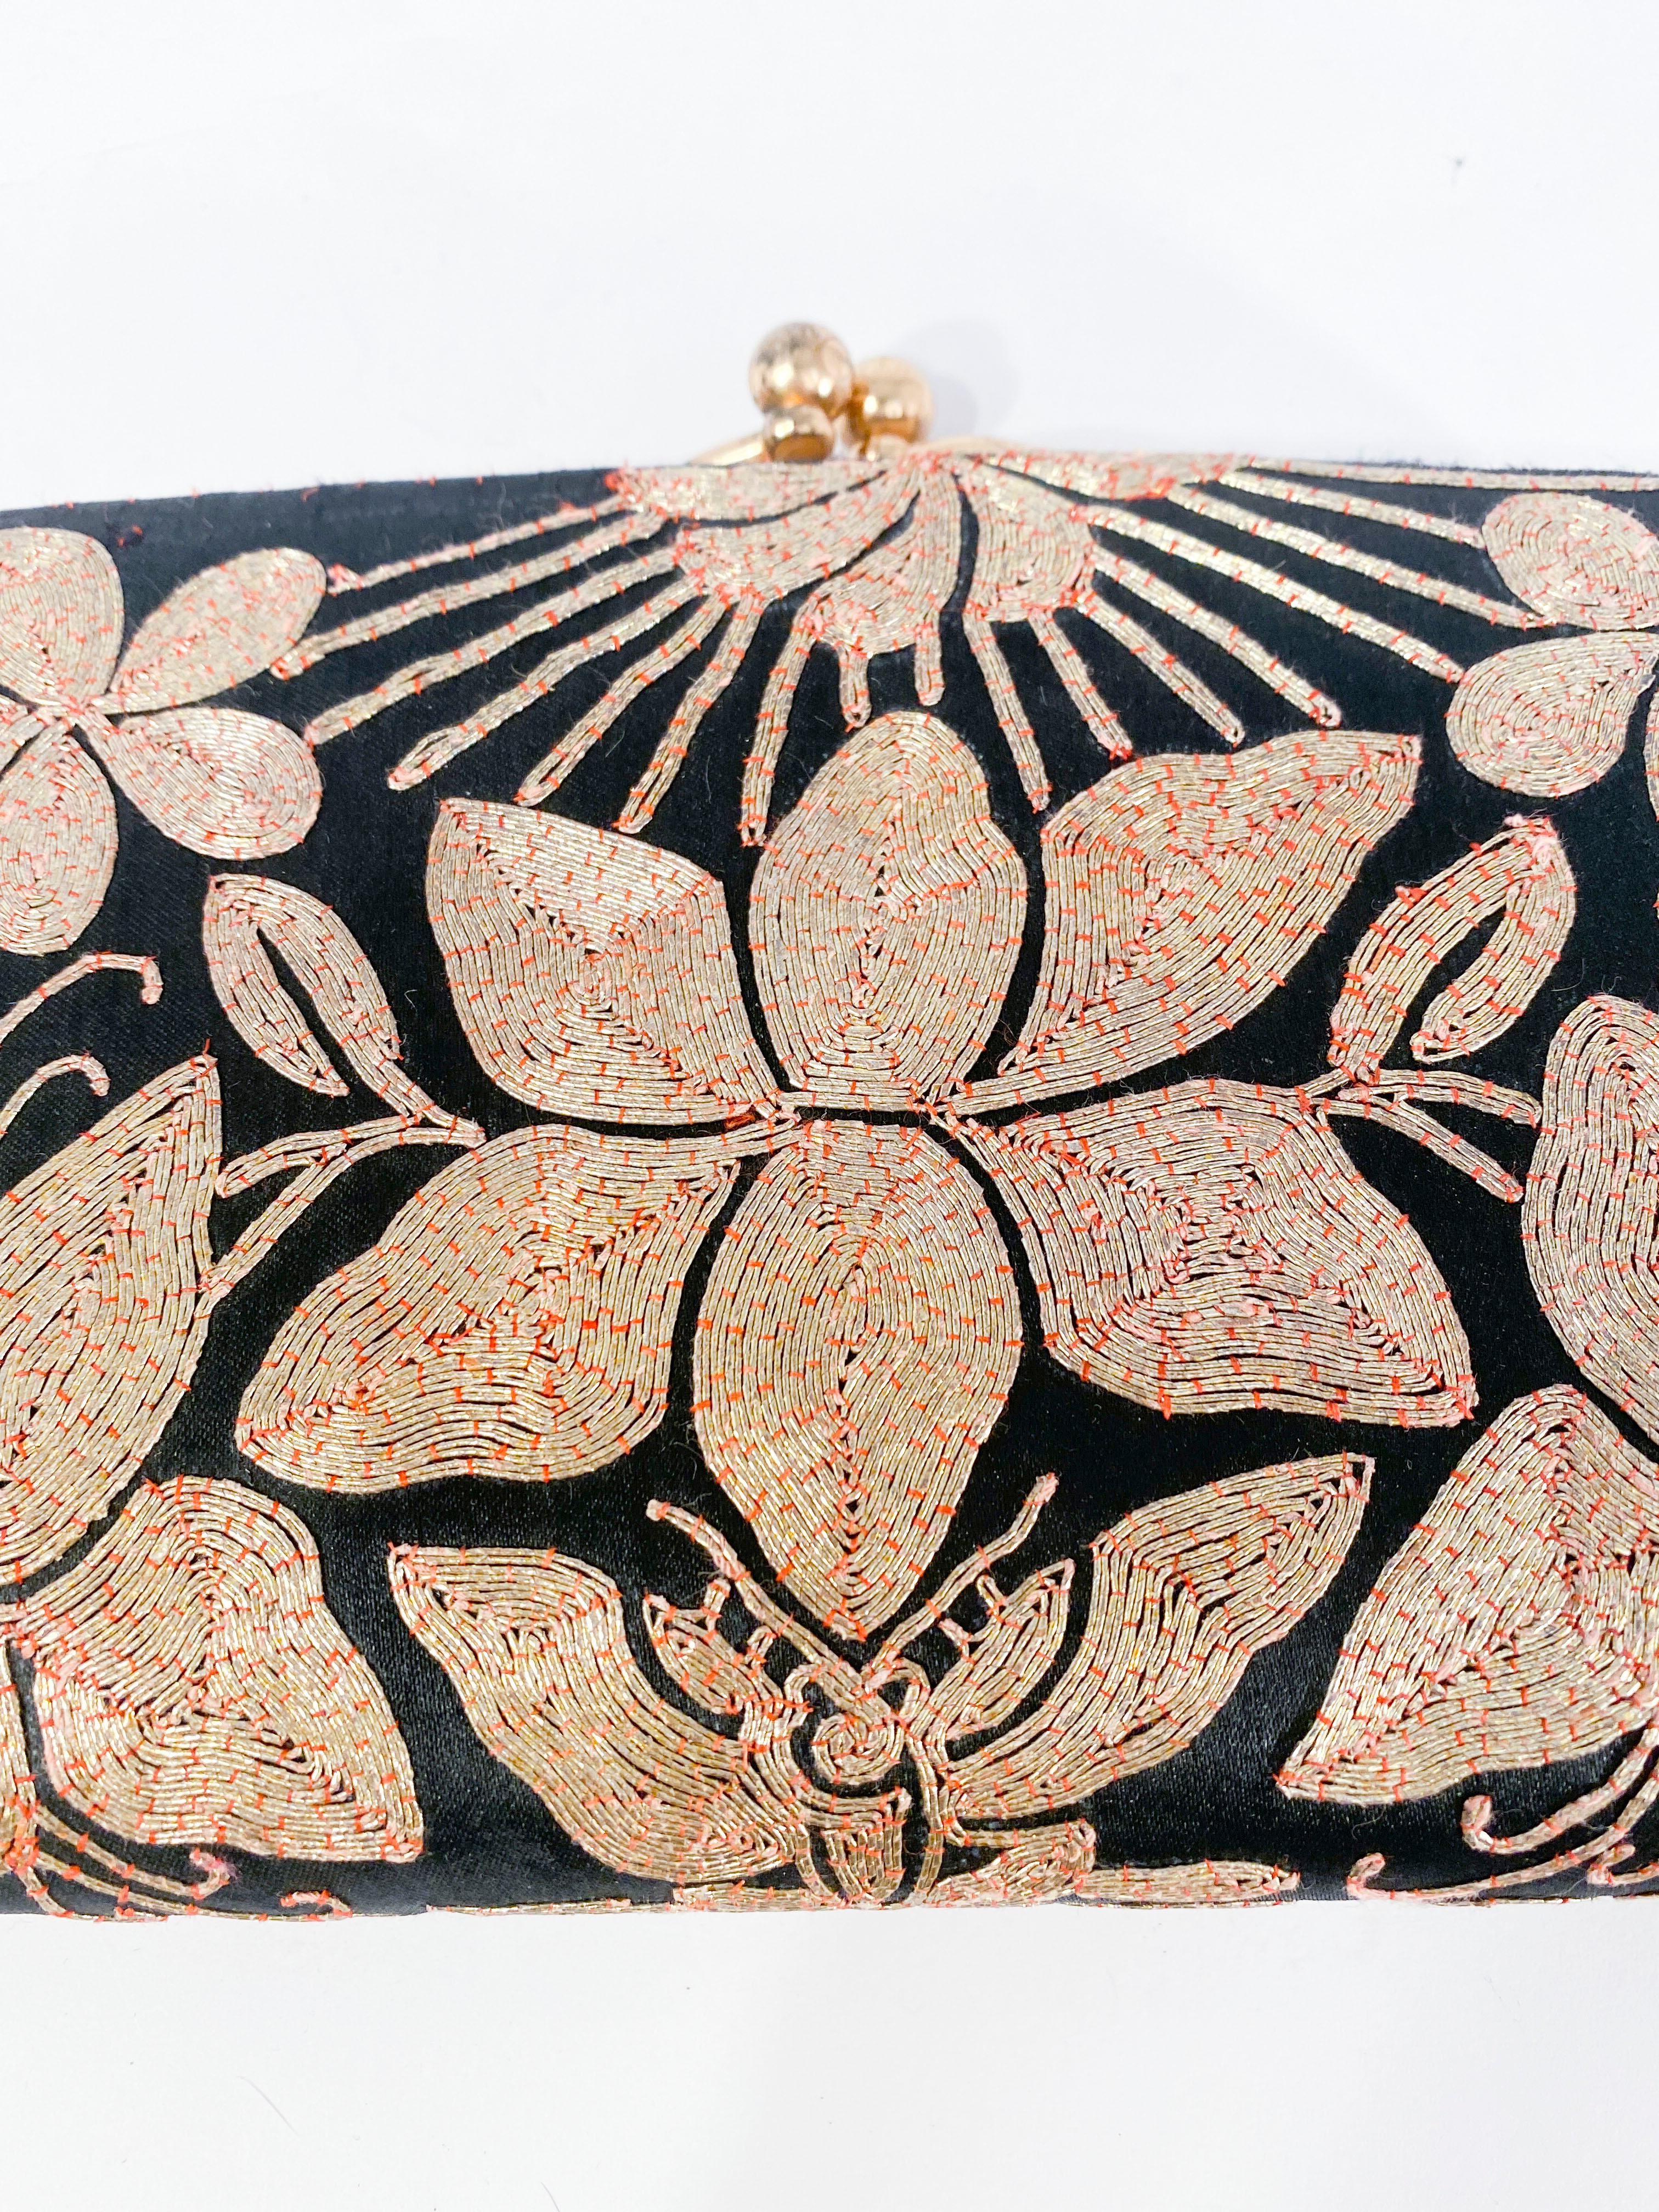 Beige 1940s Black Satin Evening Clutch with Gold Metallic Shusu Embroidery 